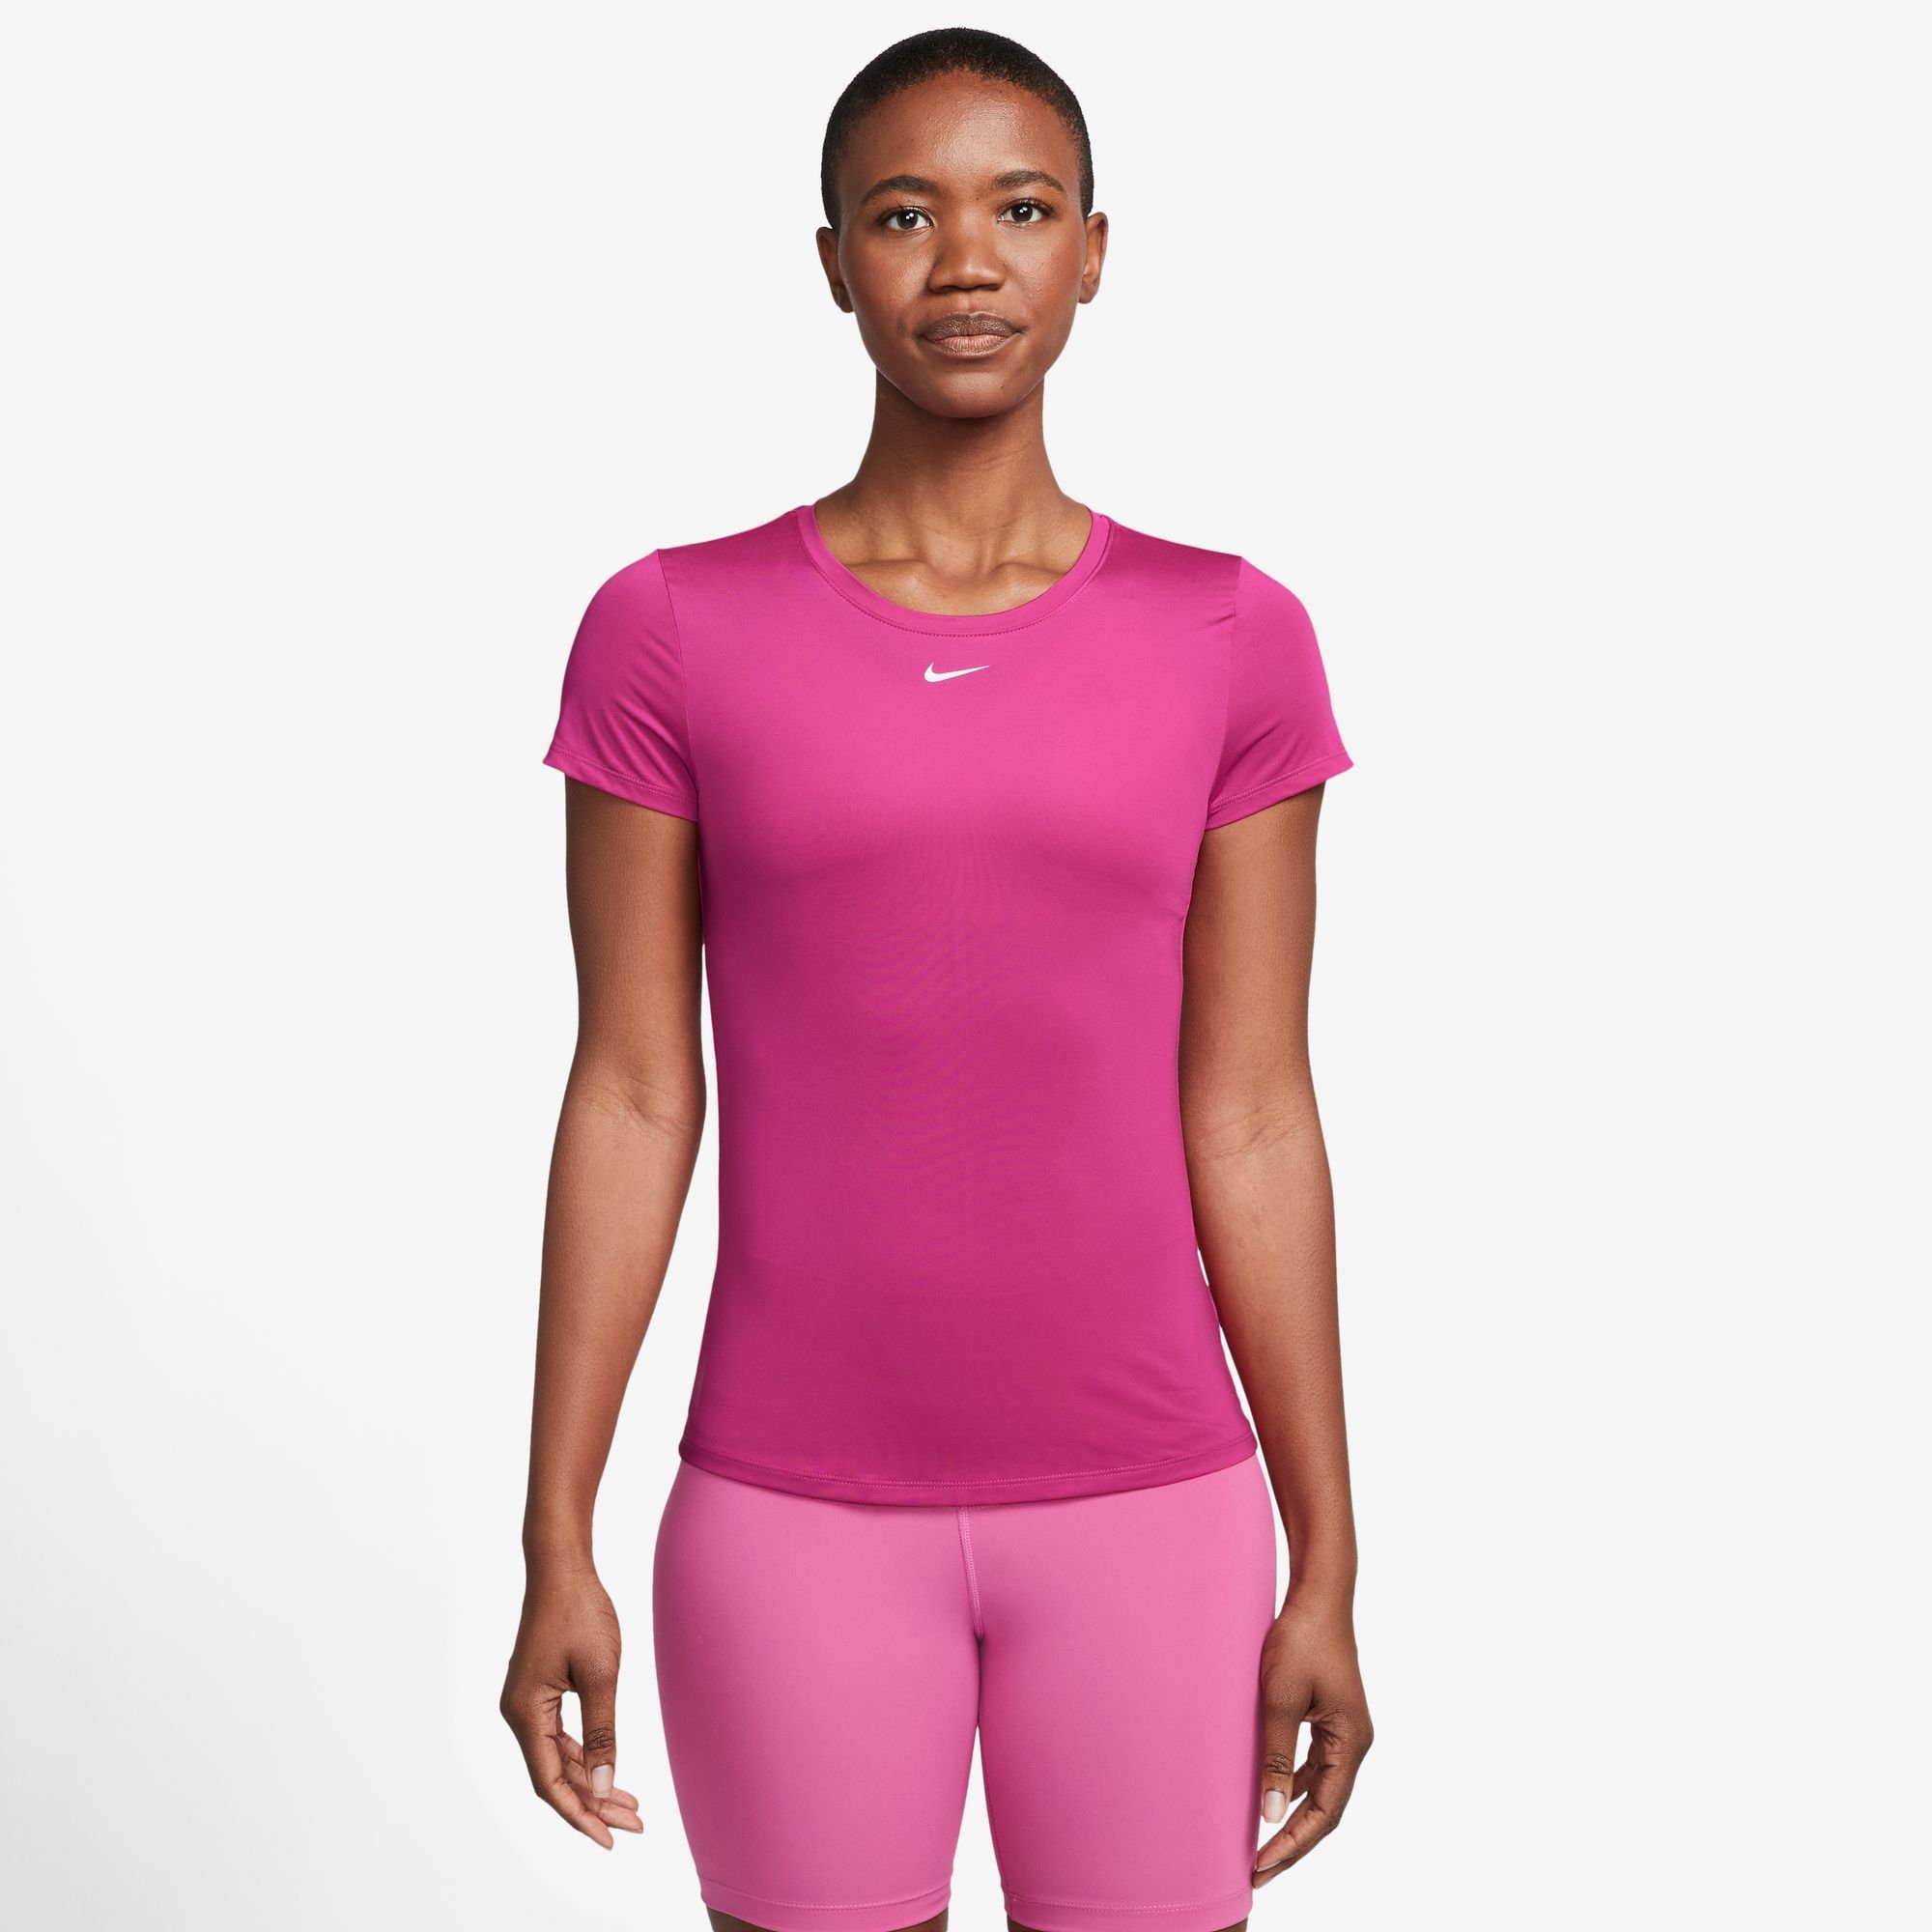 FIREBERRY/WHITE TOP SHORT-SLEEVE ONE SLIM Trainingsshirt WOMEN'S DRI-FIT Nike FIT